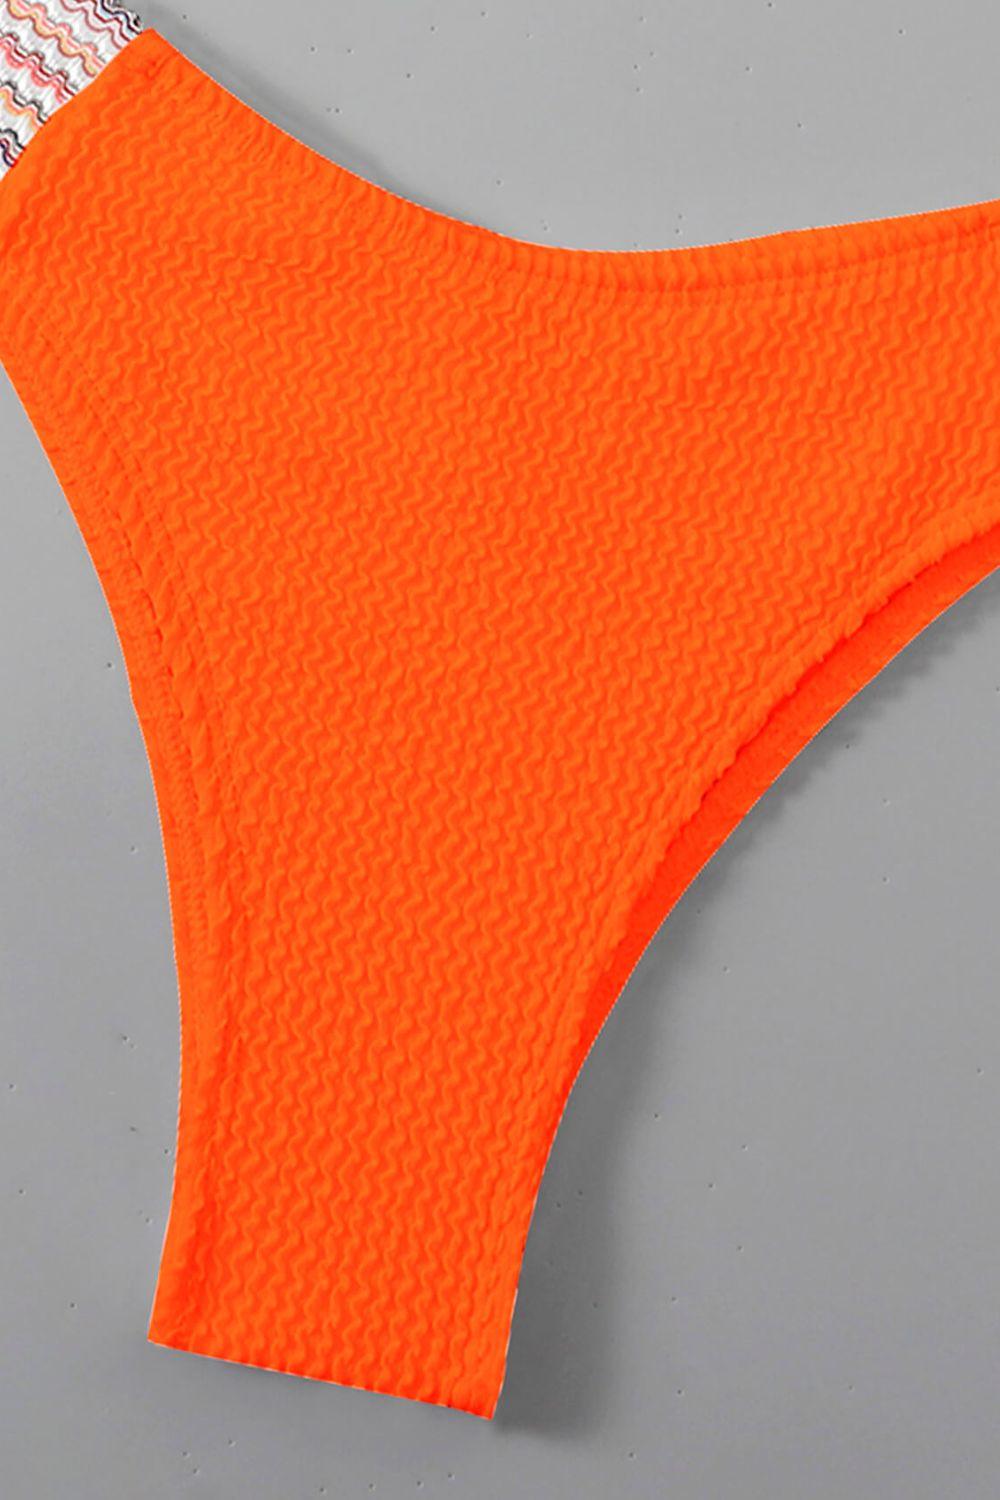 Women's Swimwear - 2PC Contrast Textured High Cut Swim Set